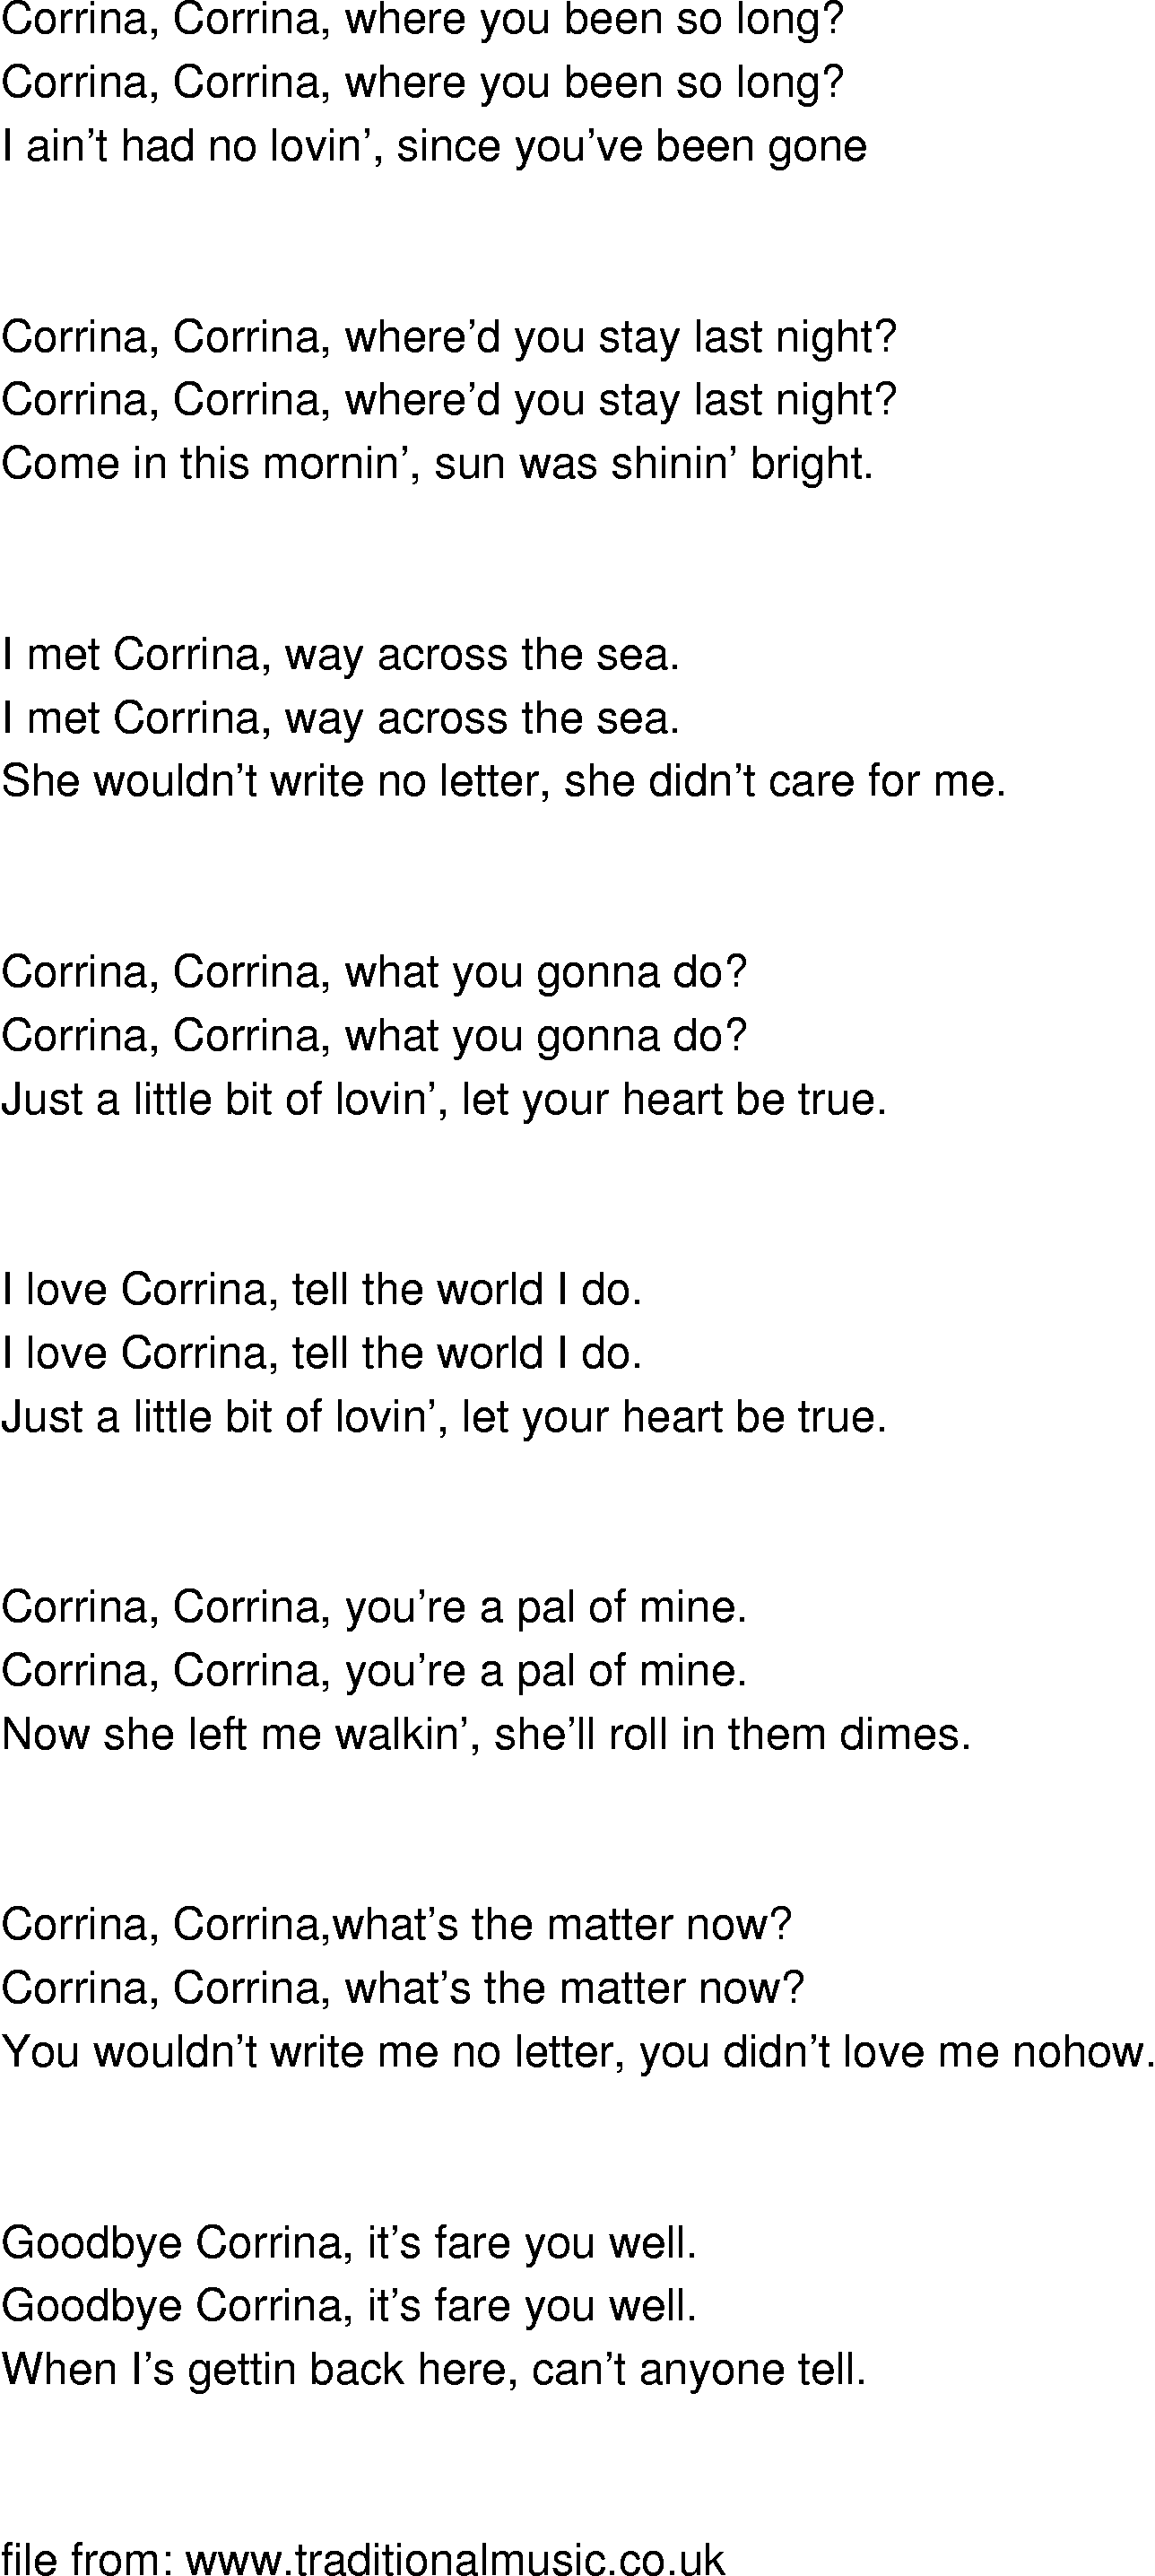 Old-Time (oldtimey) Song Lyrics - corrine, corrina